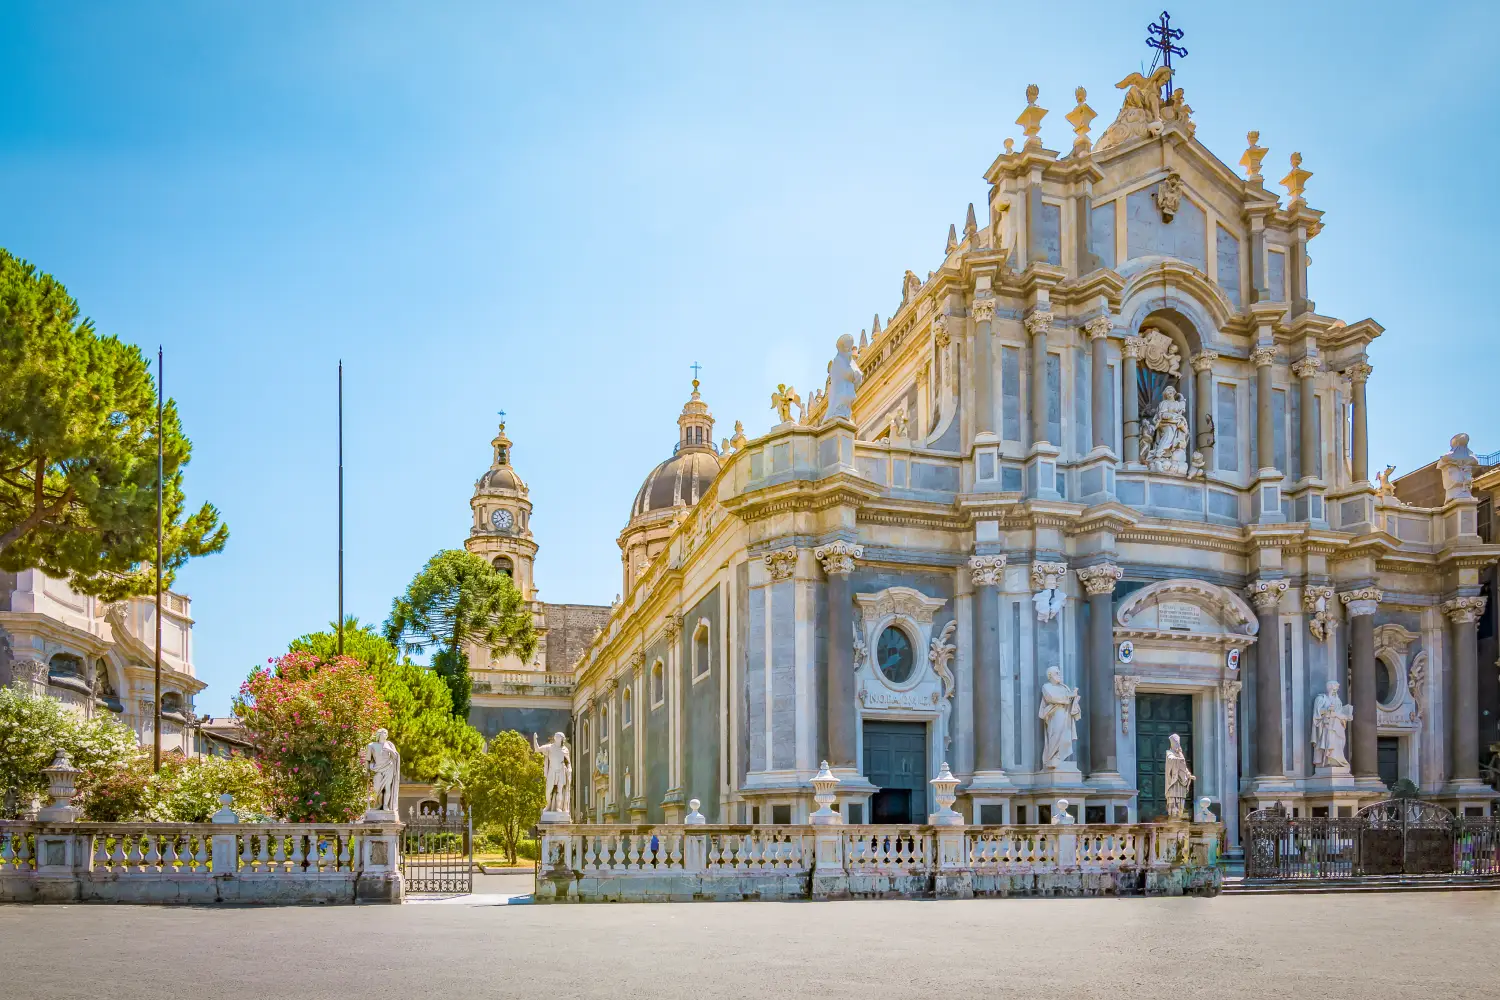 Piazza Del Duomo mit der Kathedrale von Santa Agatha in Catania, Sizilien